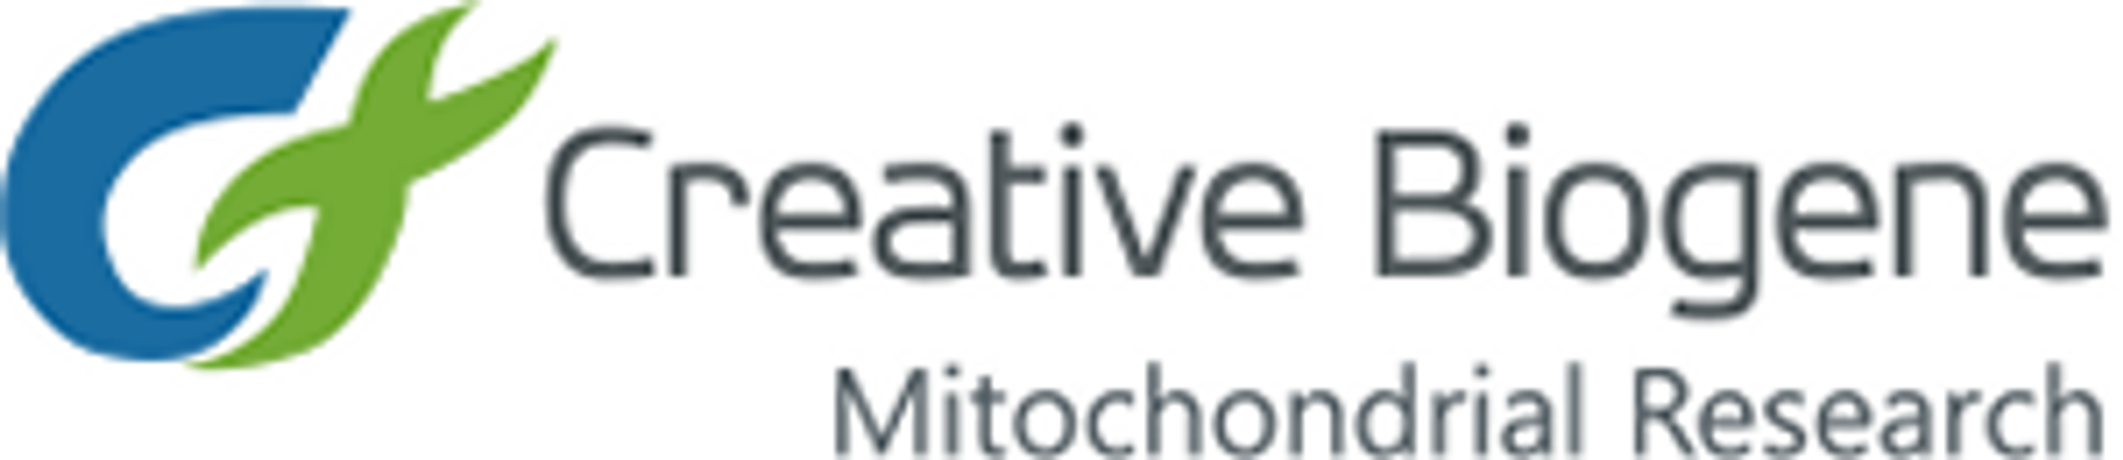 Creative Biogene - Mitochondria-Related Diseases Research